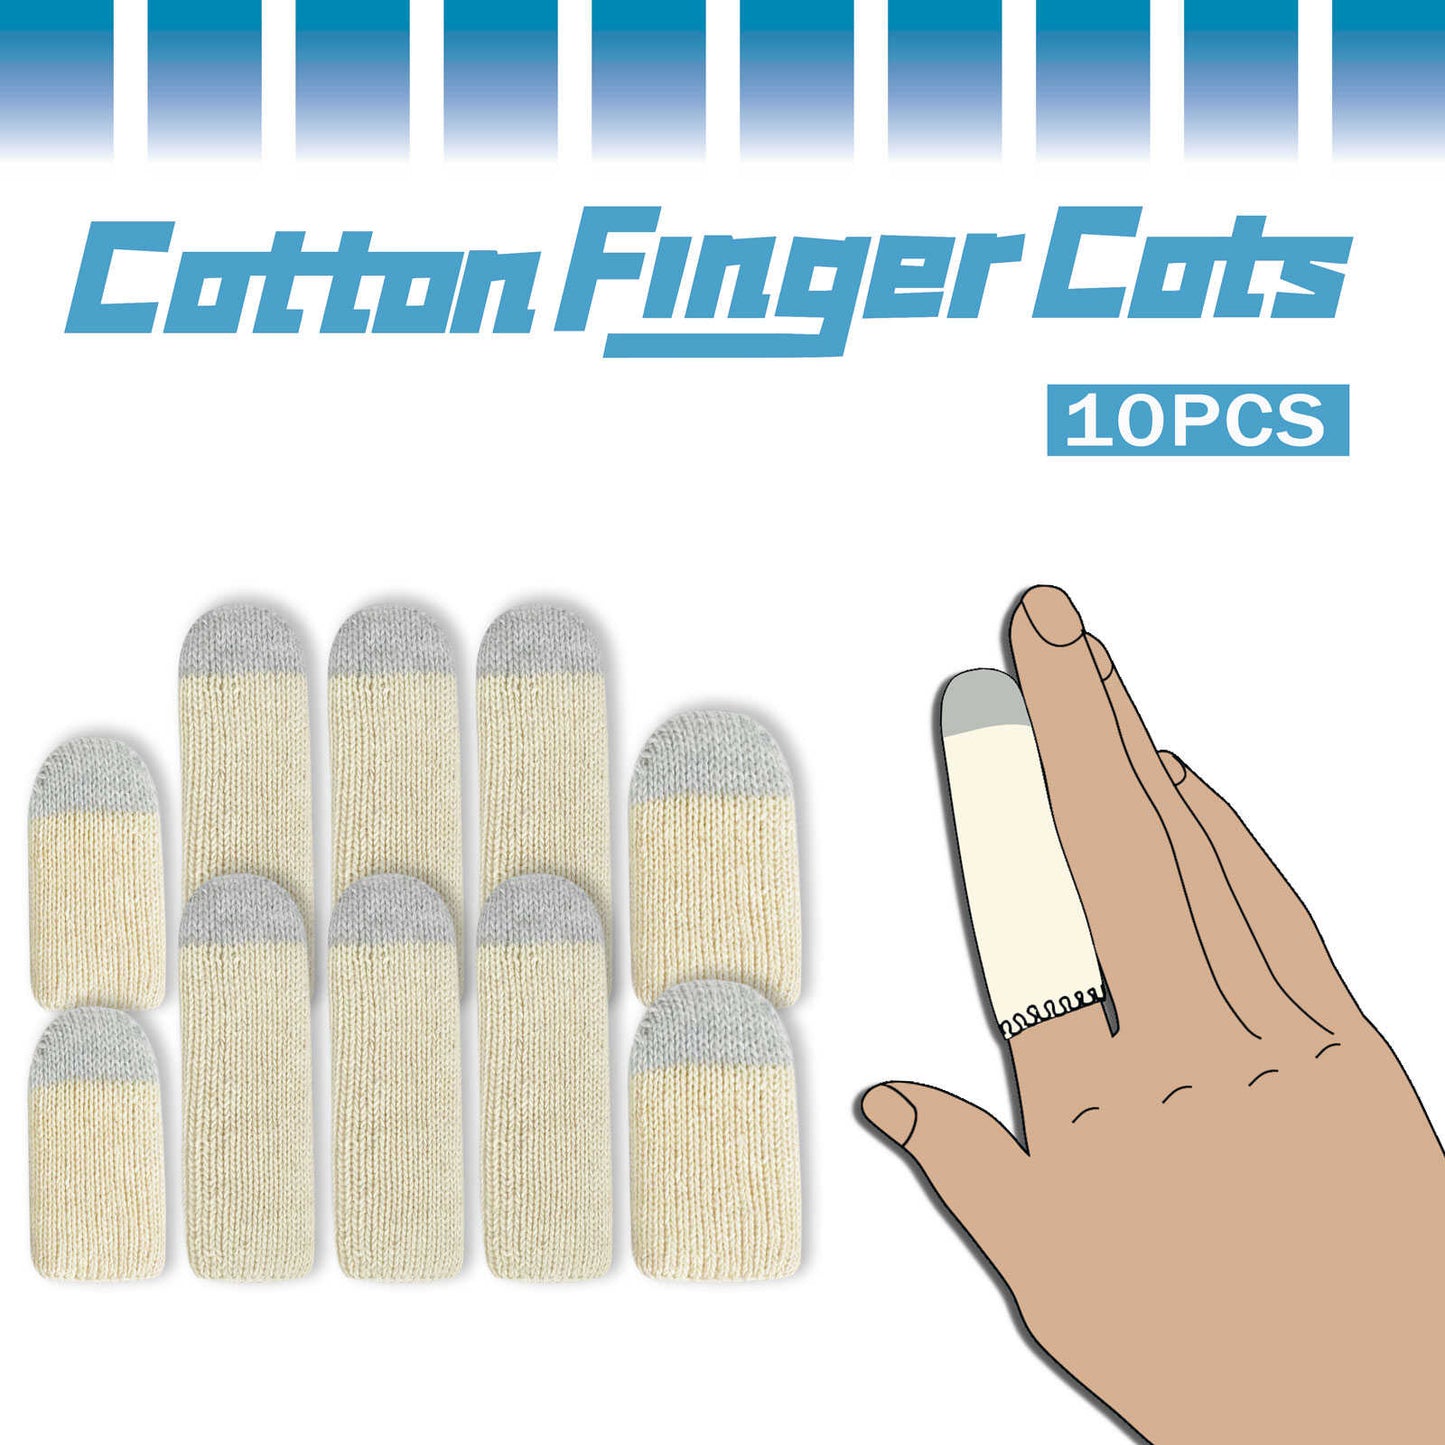 EvridWear 10 Pcs Touchscreen Finger Cots, reusable Toe Thumb Protector